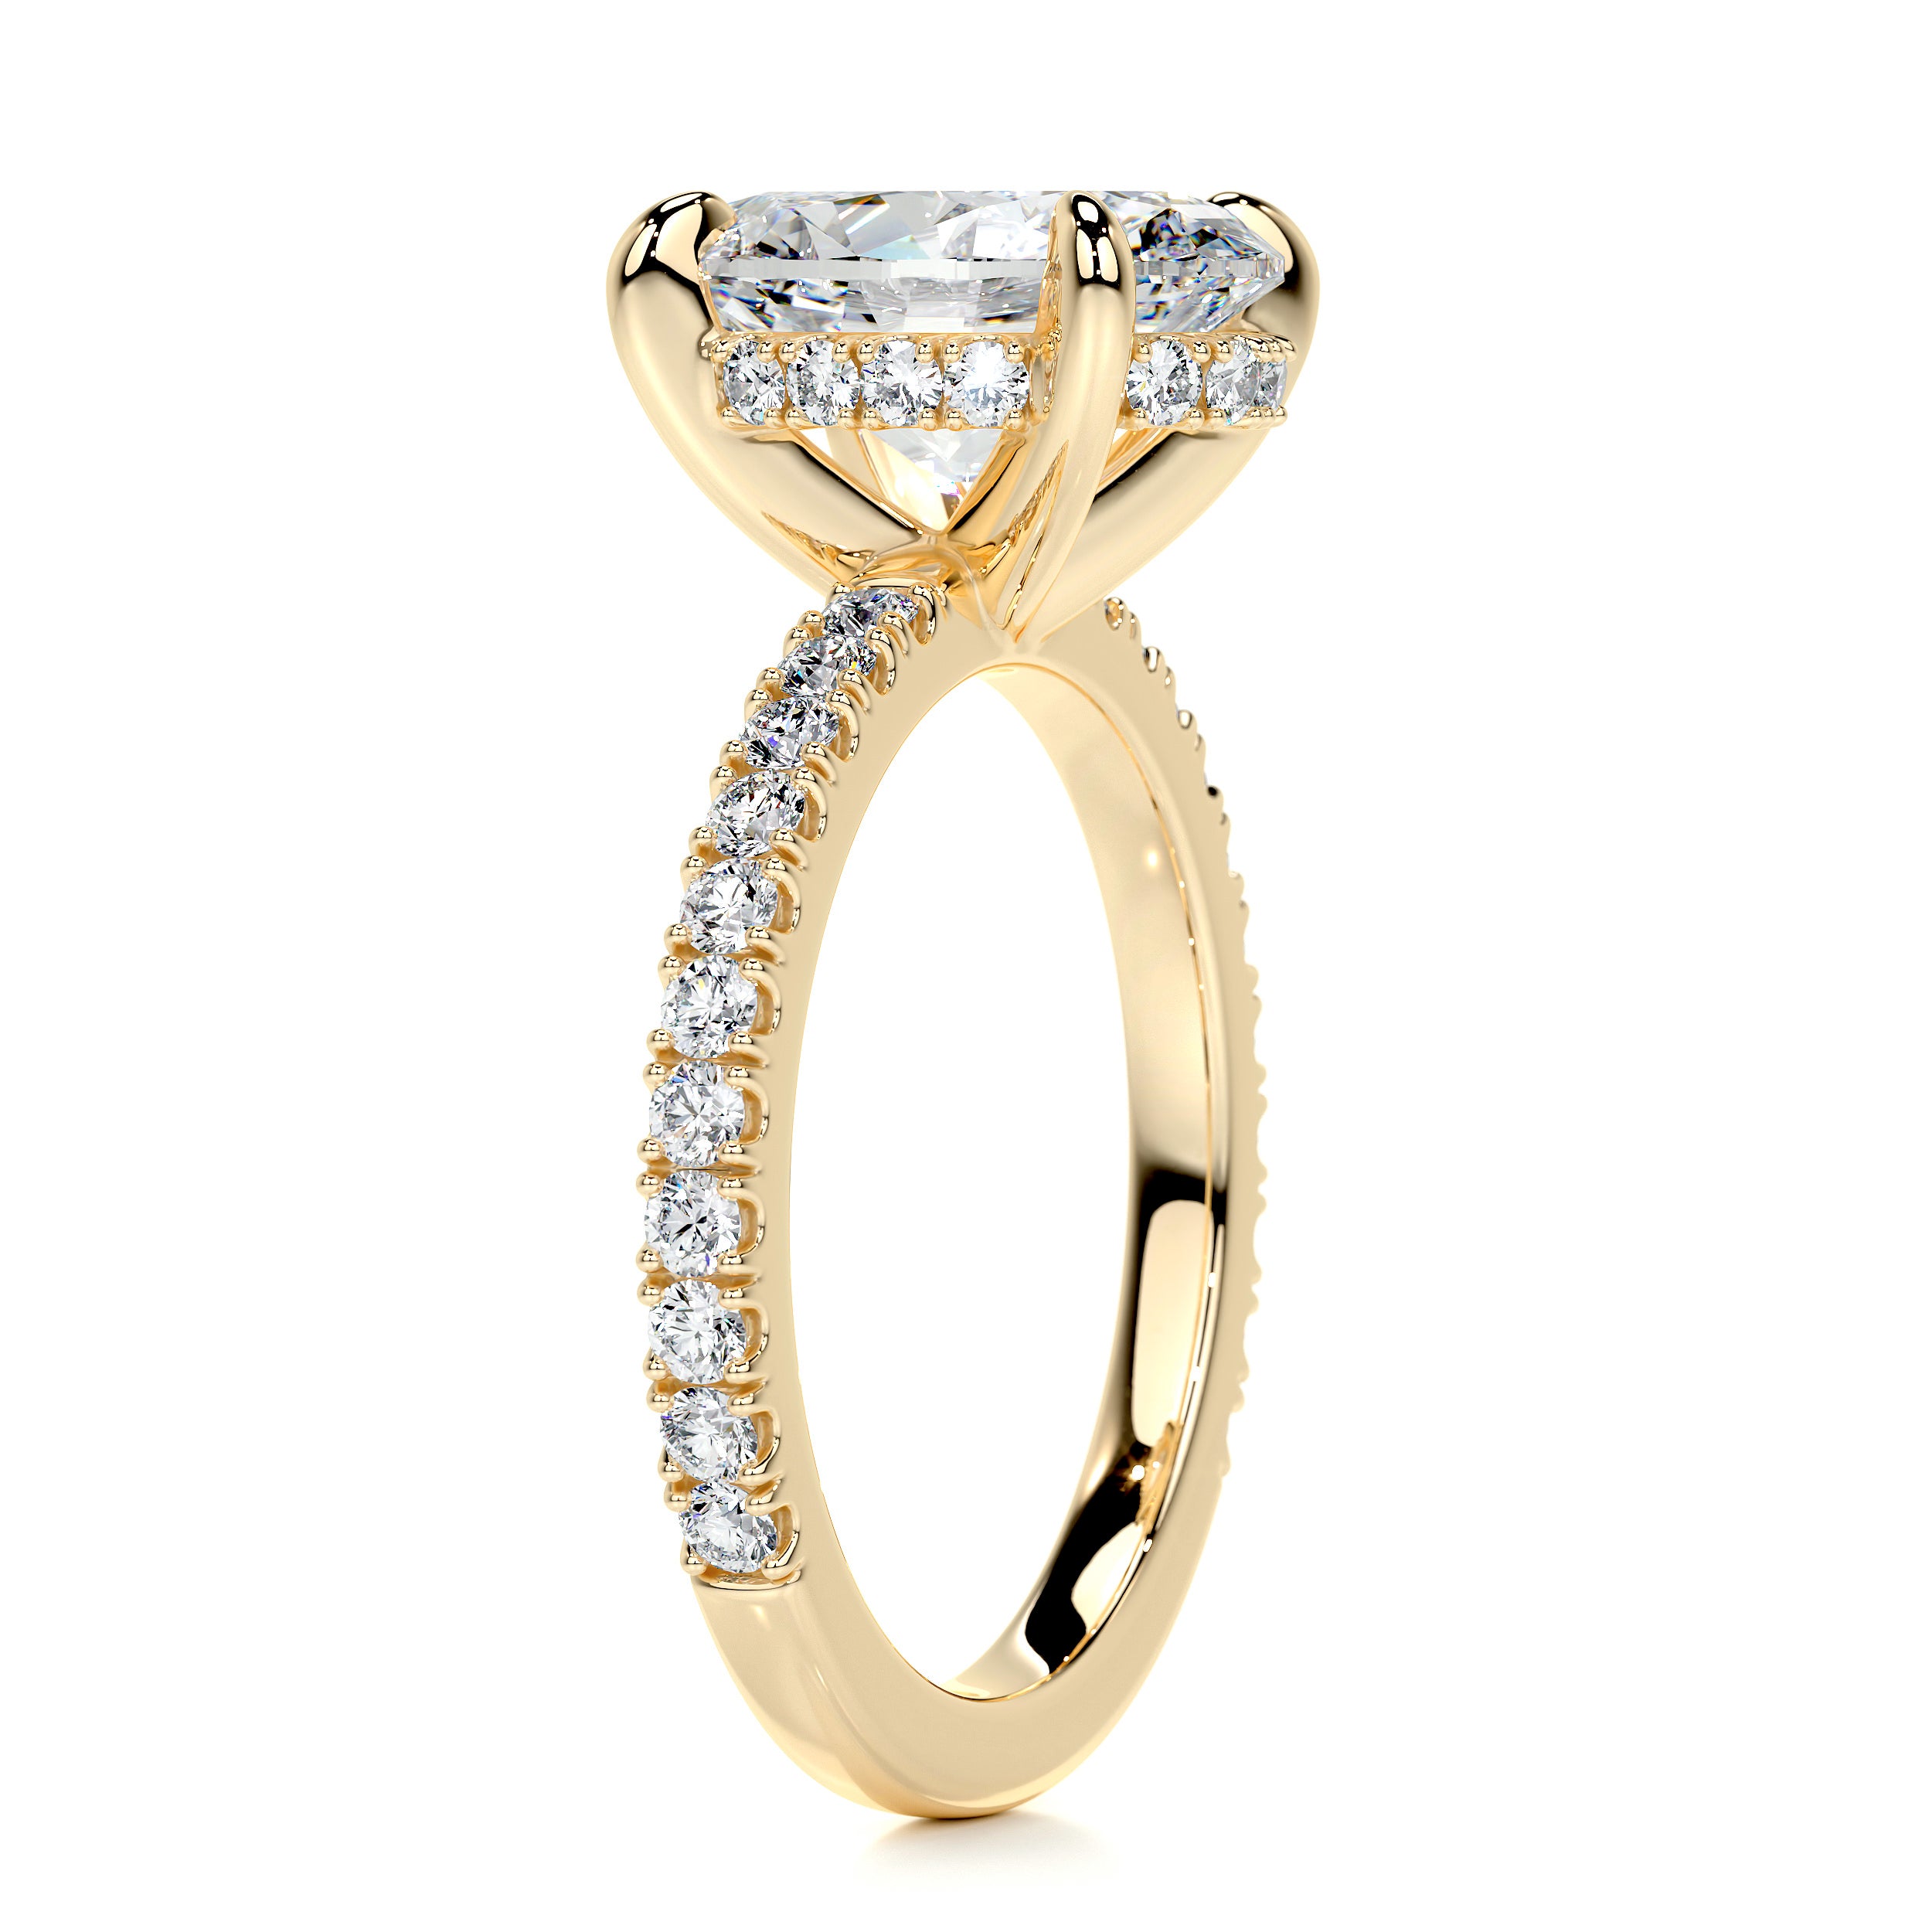 Lucy Diamond Engagement Ring   (2.5 Carat) -18K Yellow Gold